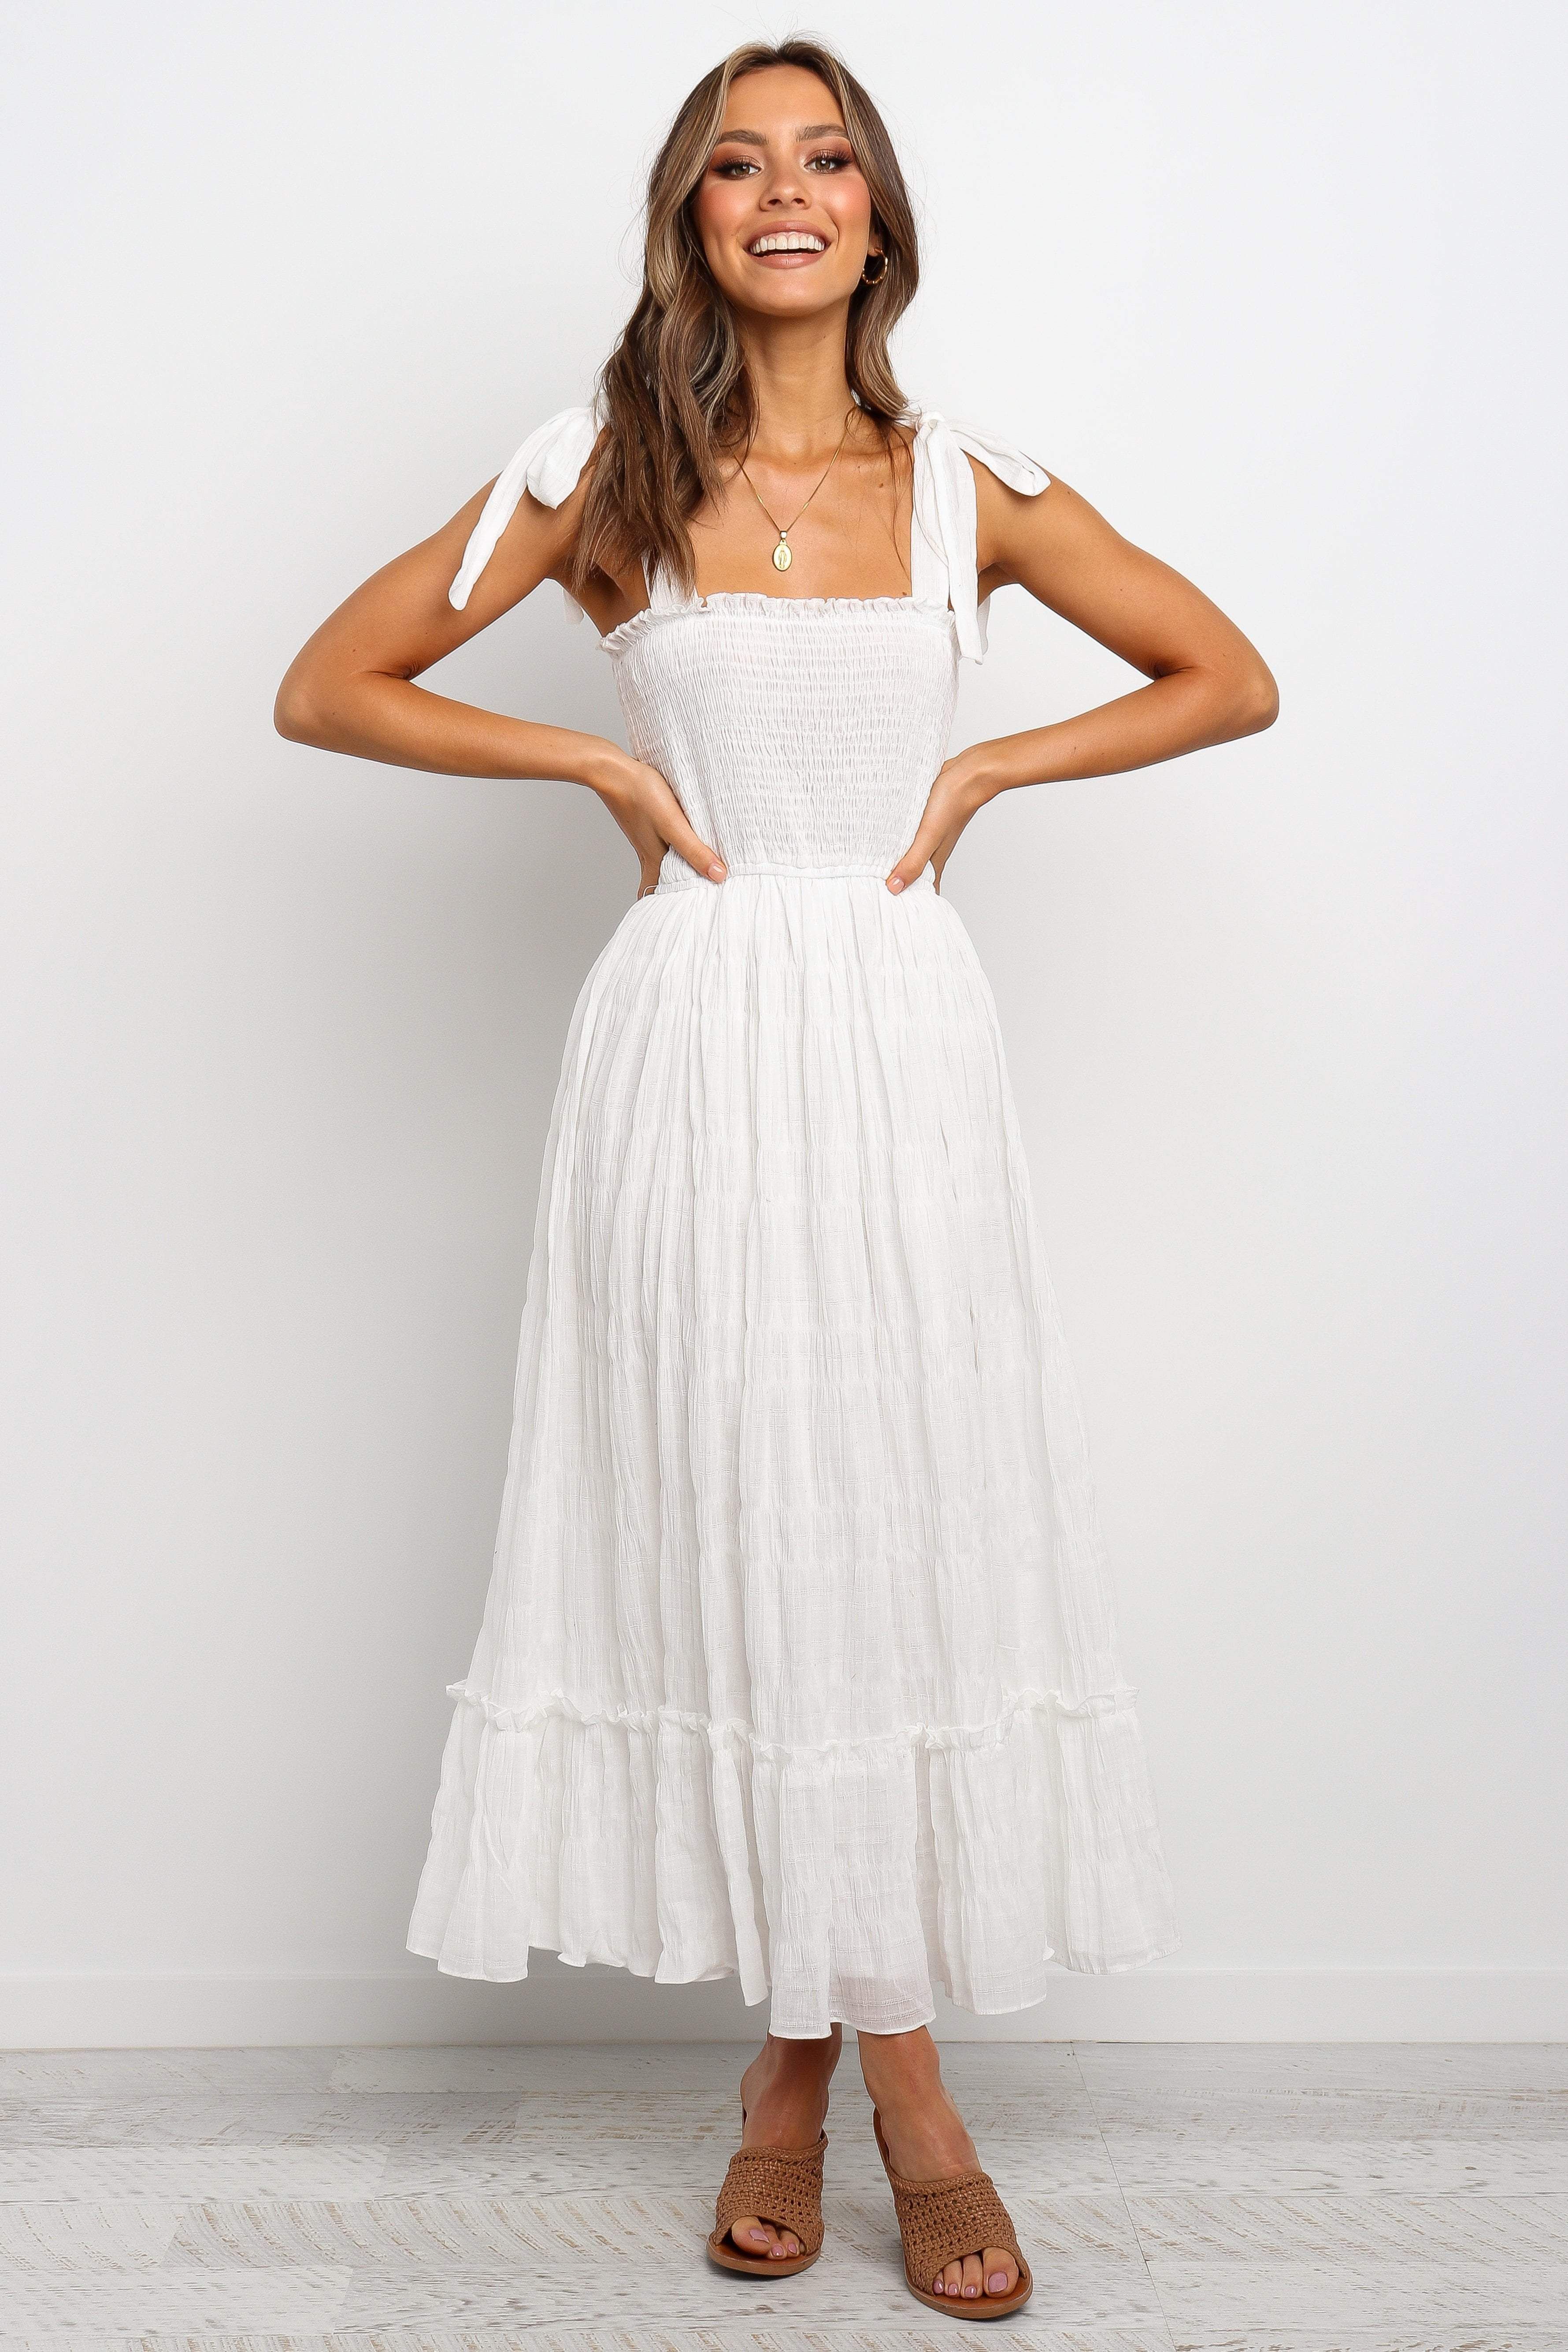 Janie Dress - White, XS - Janie Dress - White, XS -   18 style Spring dress ideas